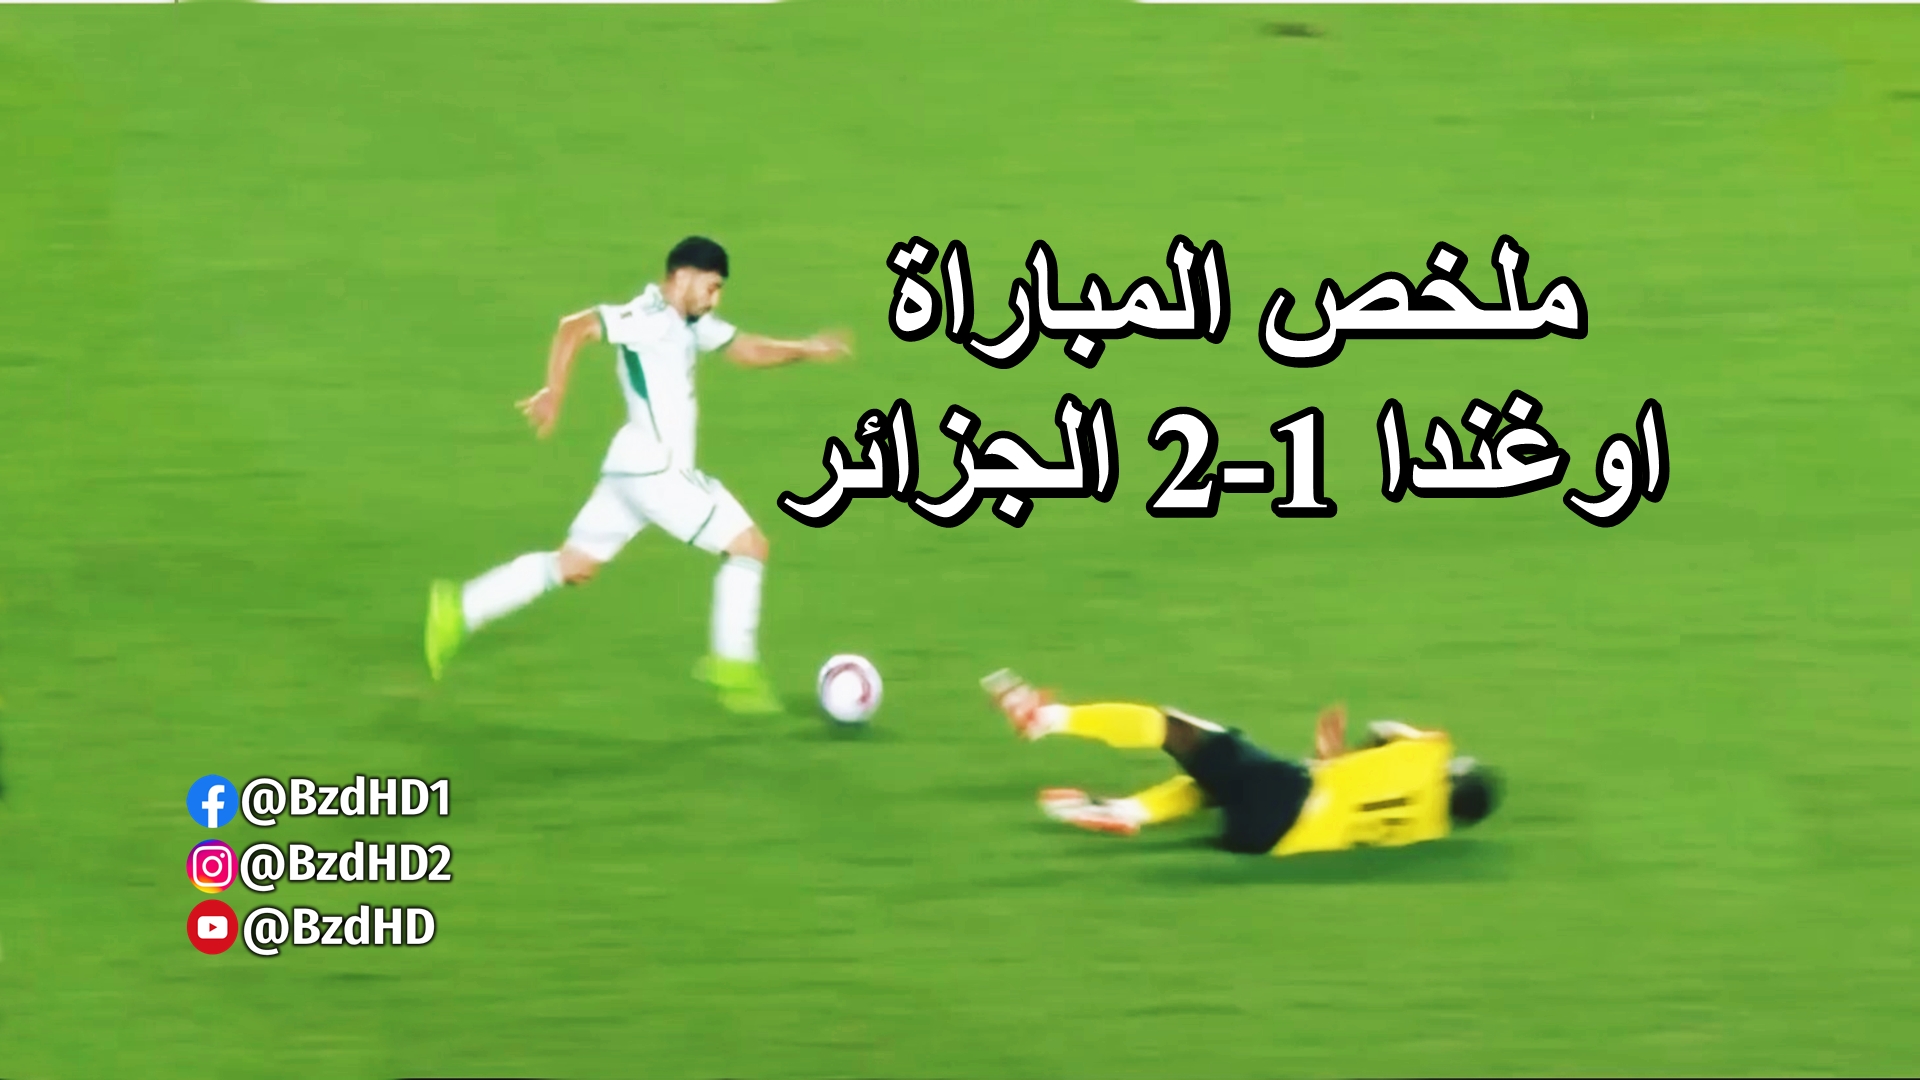 شاهد ملخص مبارة الجزائر واوغندا 2-1 - اهداف مباراة الجزائر 4